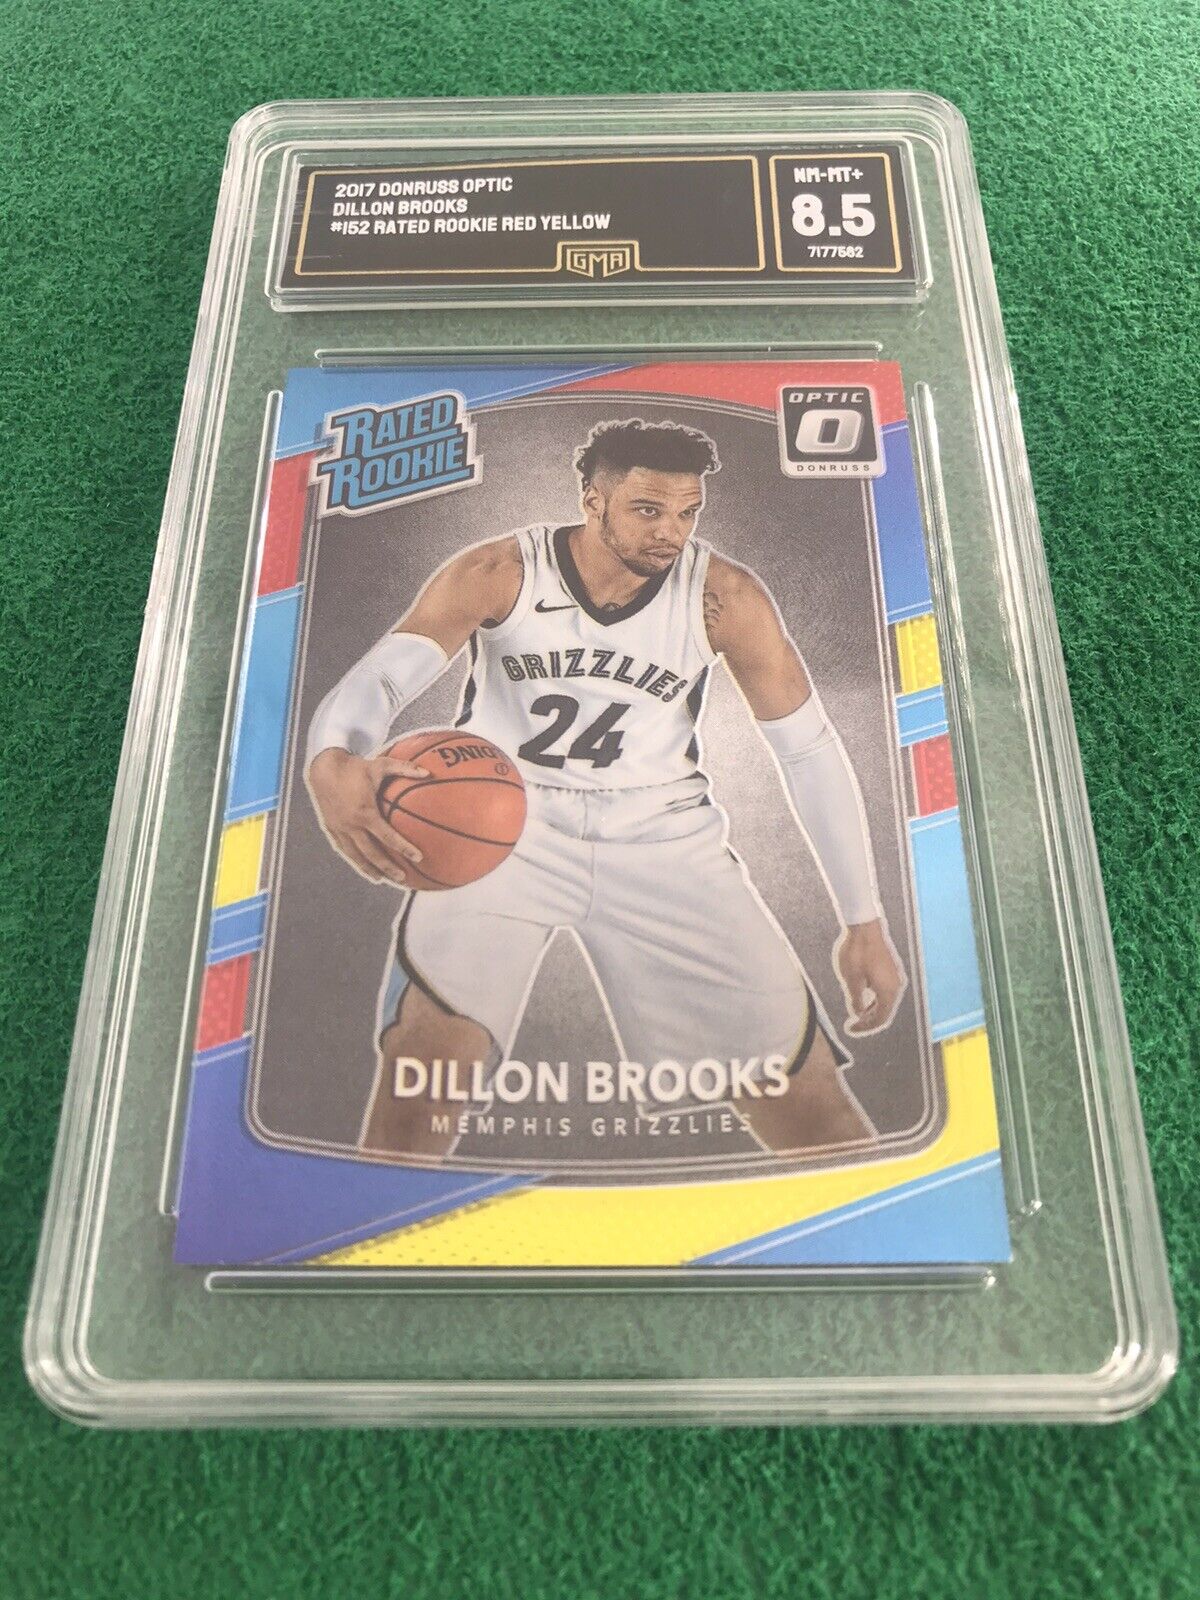 2017 Donruss Optic Dillon Brooks Rated Rookie Red Yellow Card #152 GMA 8.5 NBA